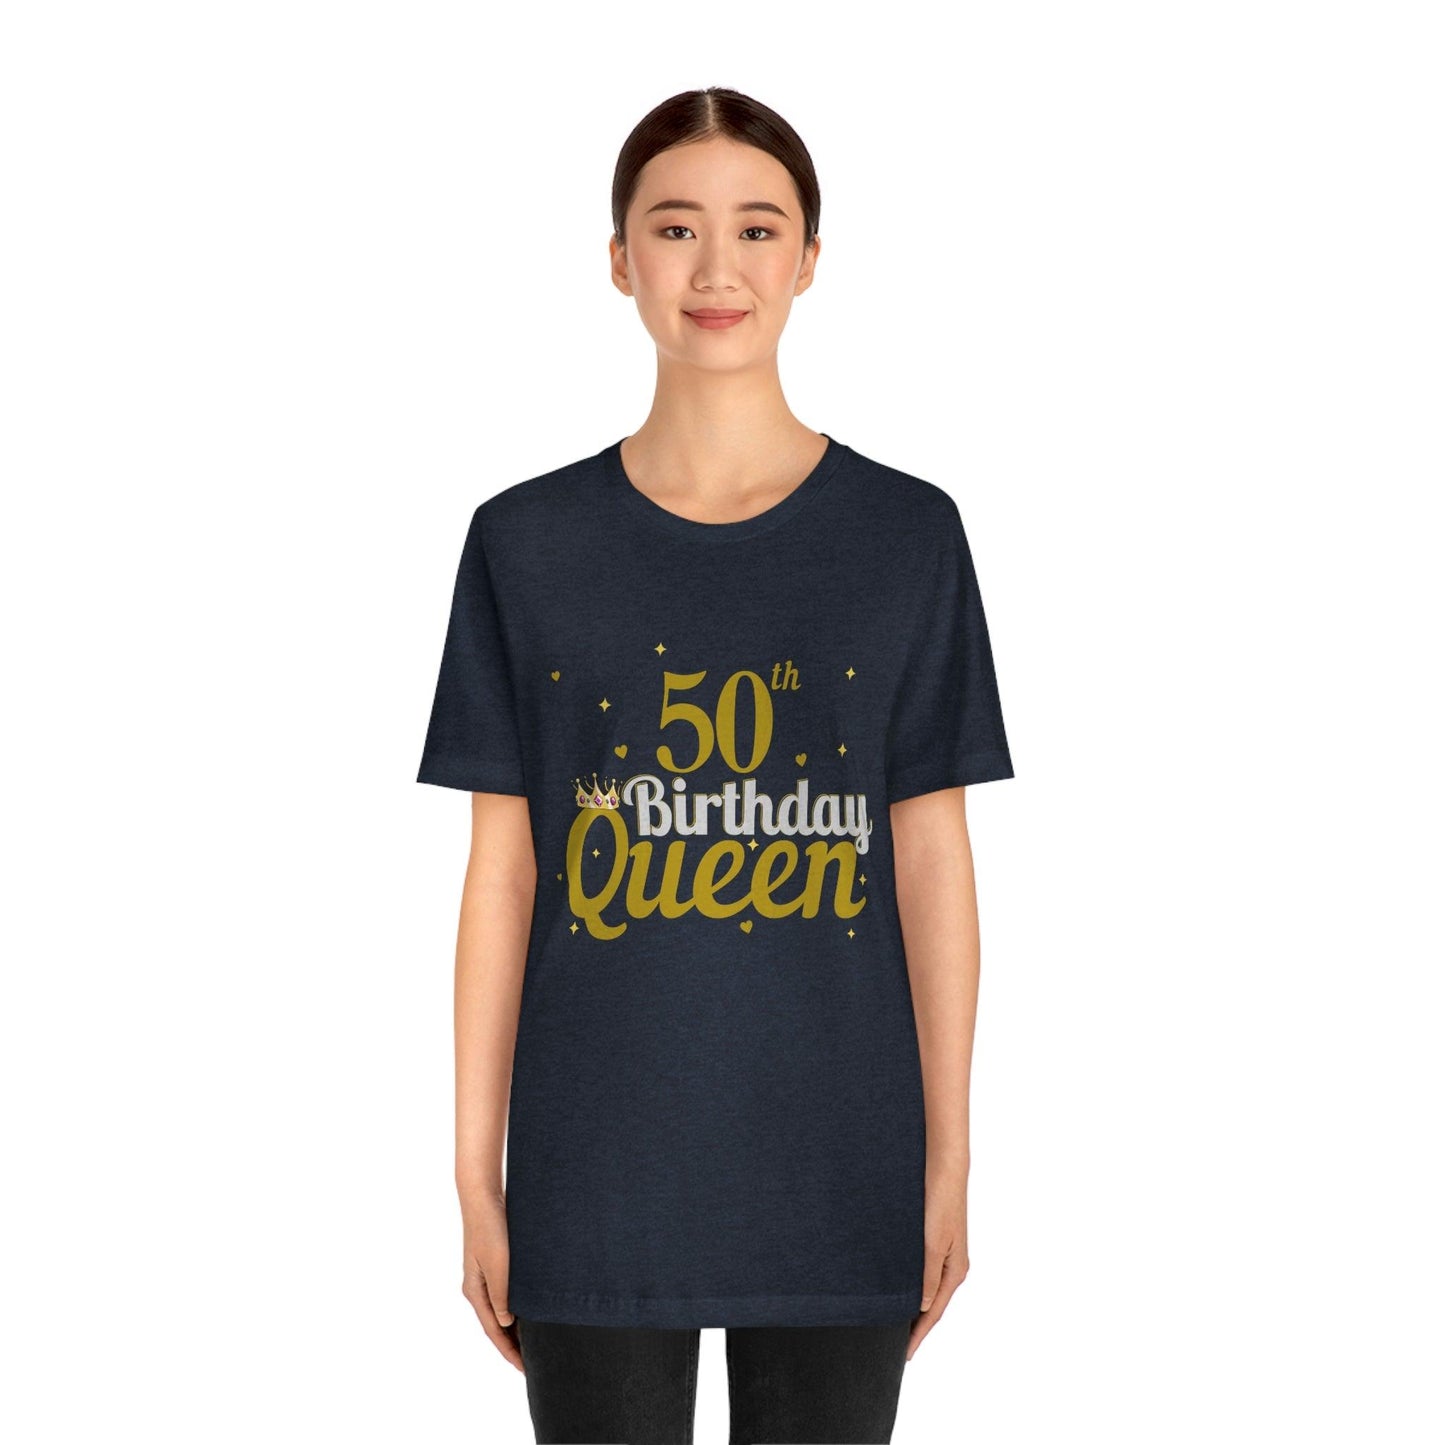 50th birthday queen shirt, birthday shirt, gift for her